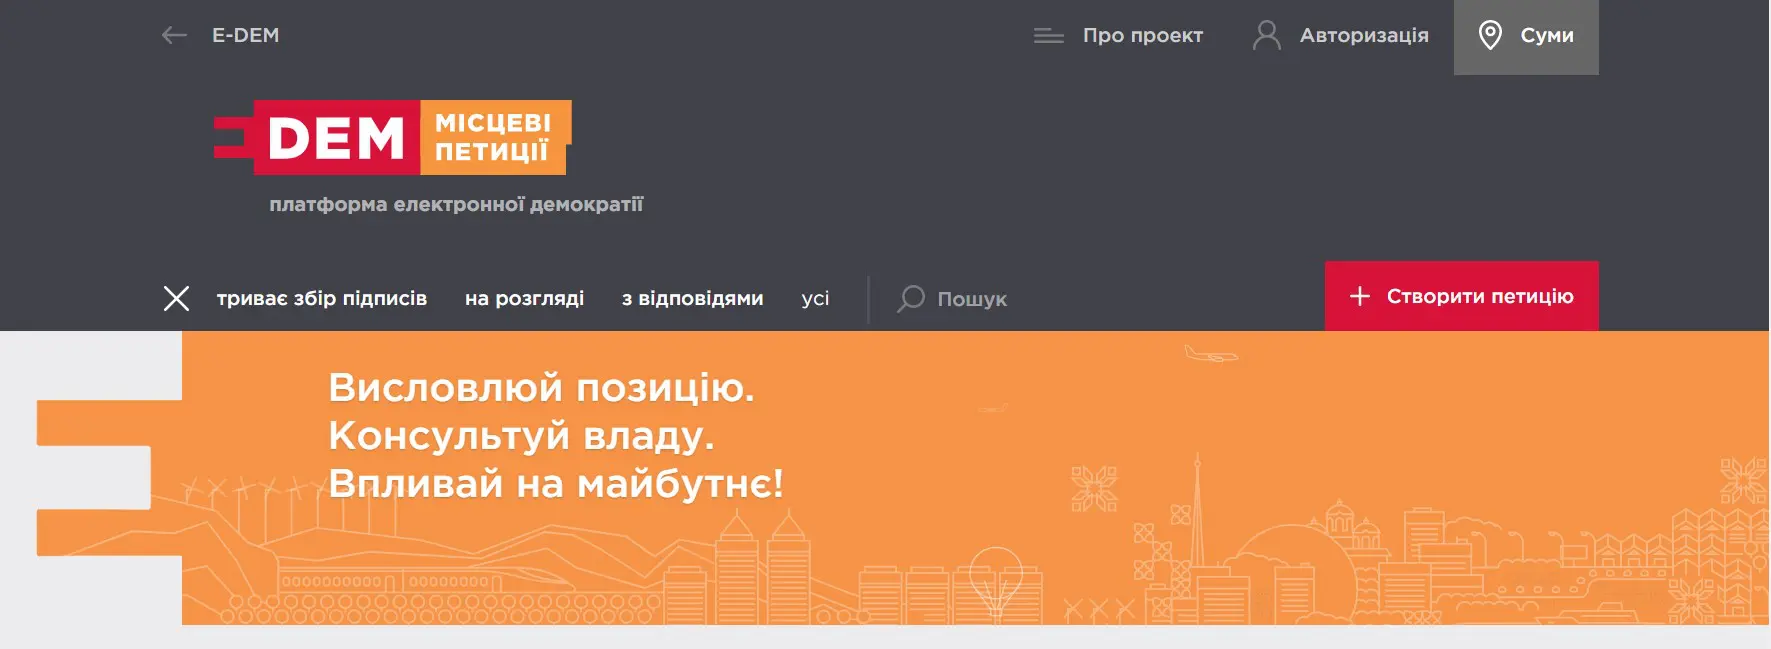 Сайт електронних петицій. Скріншот: petition.e-dem.ua/sumy